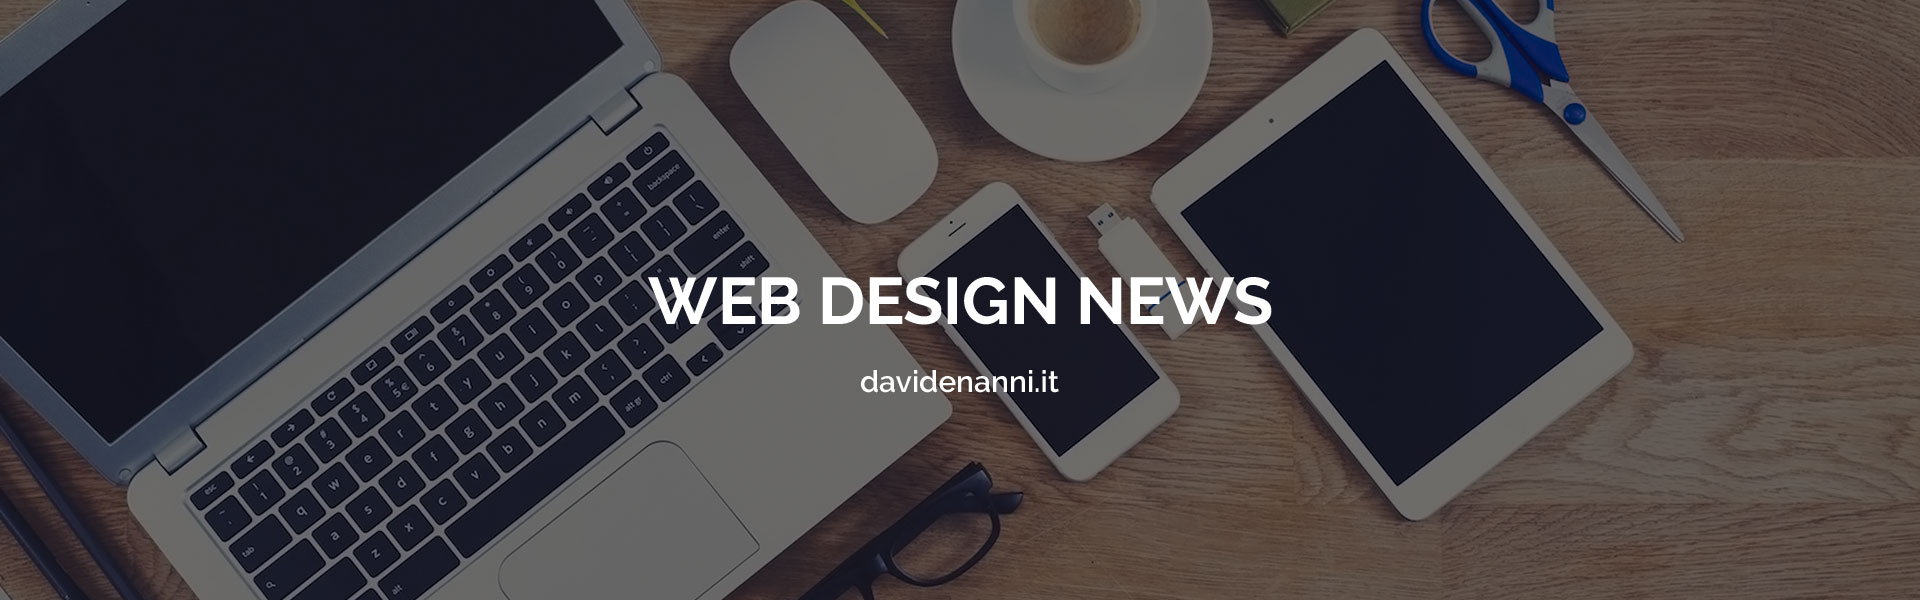 Web design news